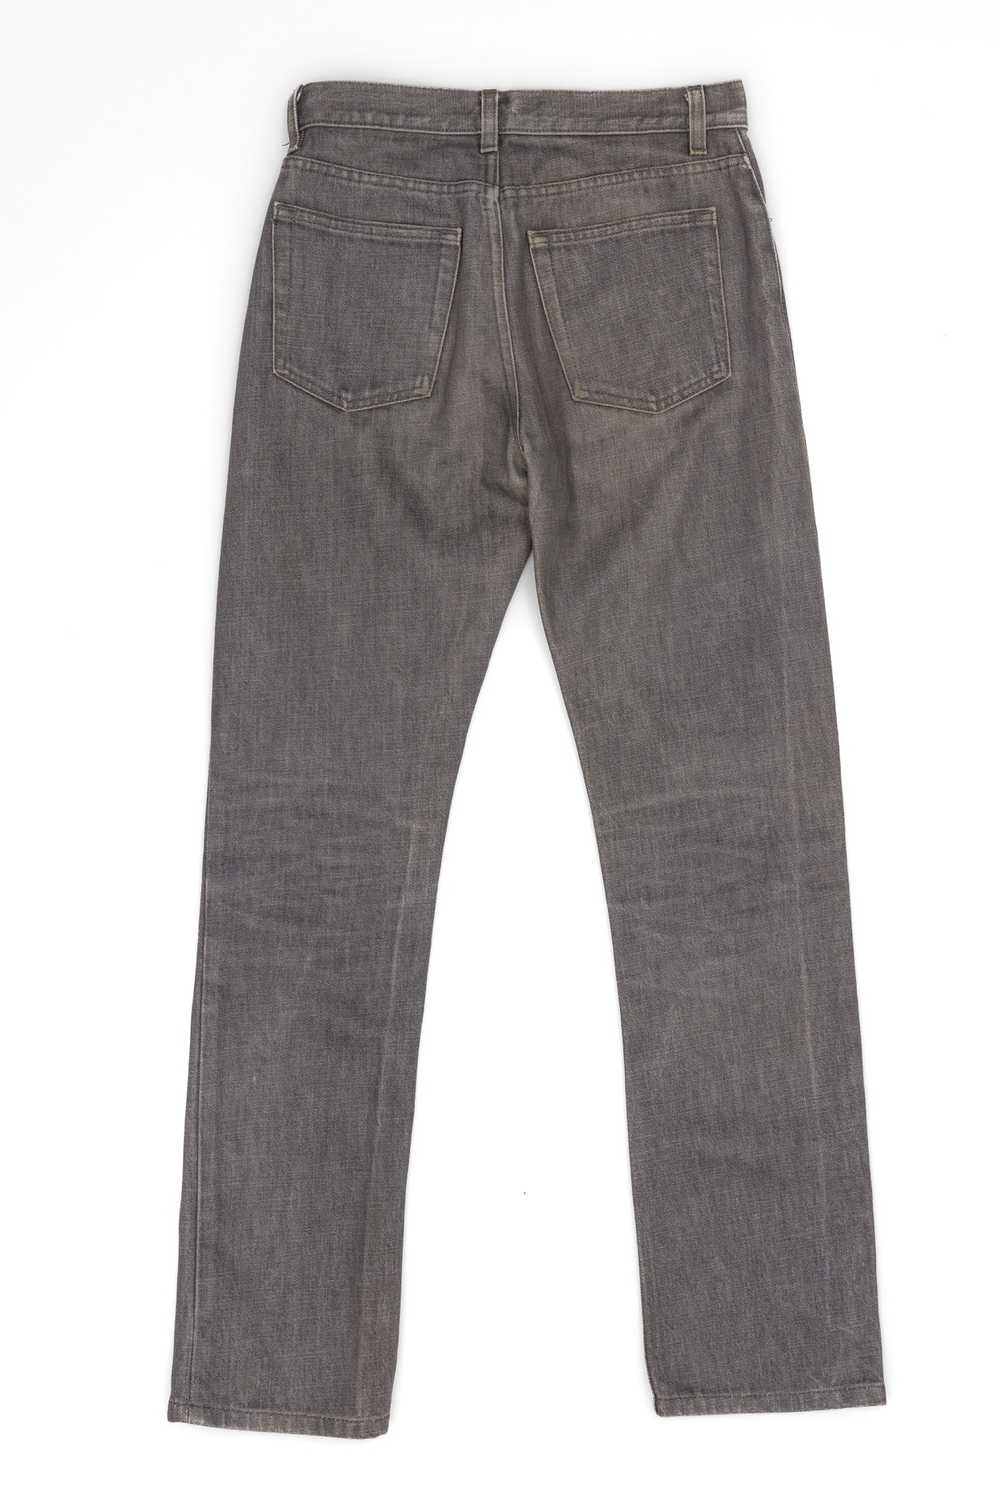 Helmut Lang Grey Classic Raw Denim Jeans - image 6